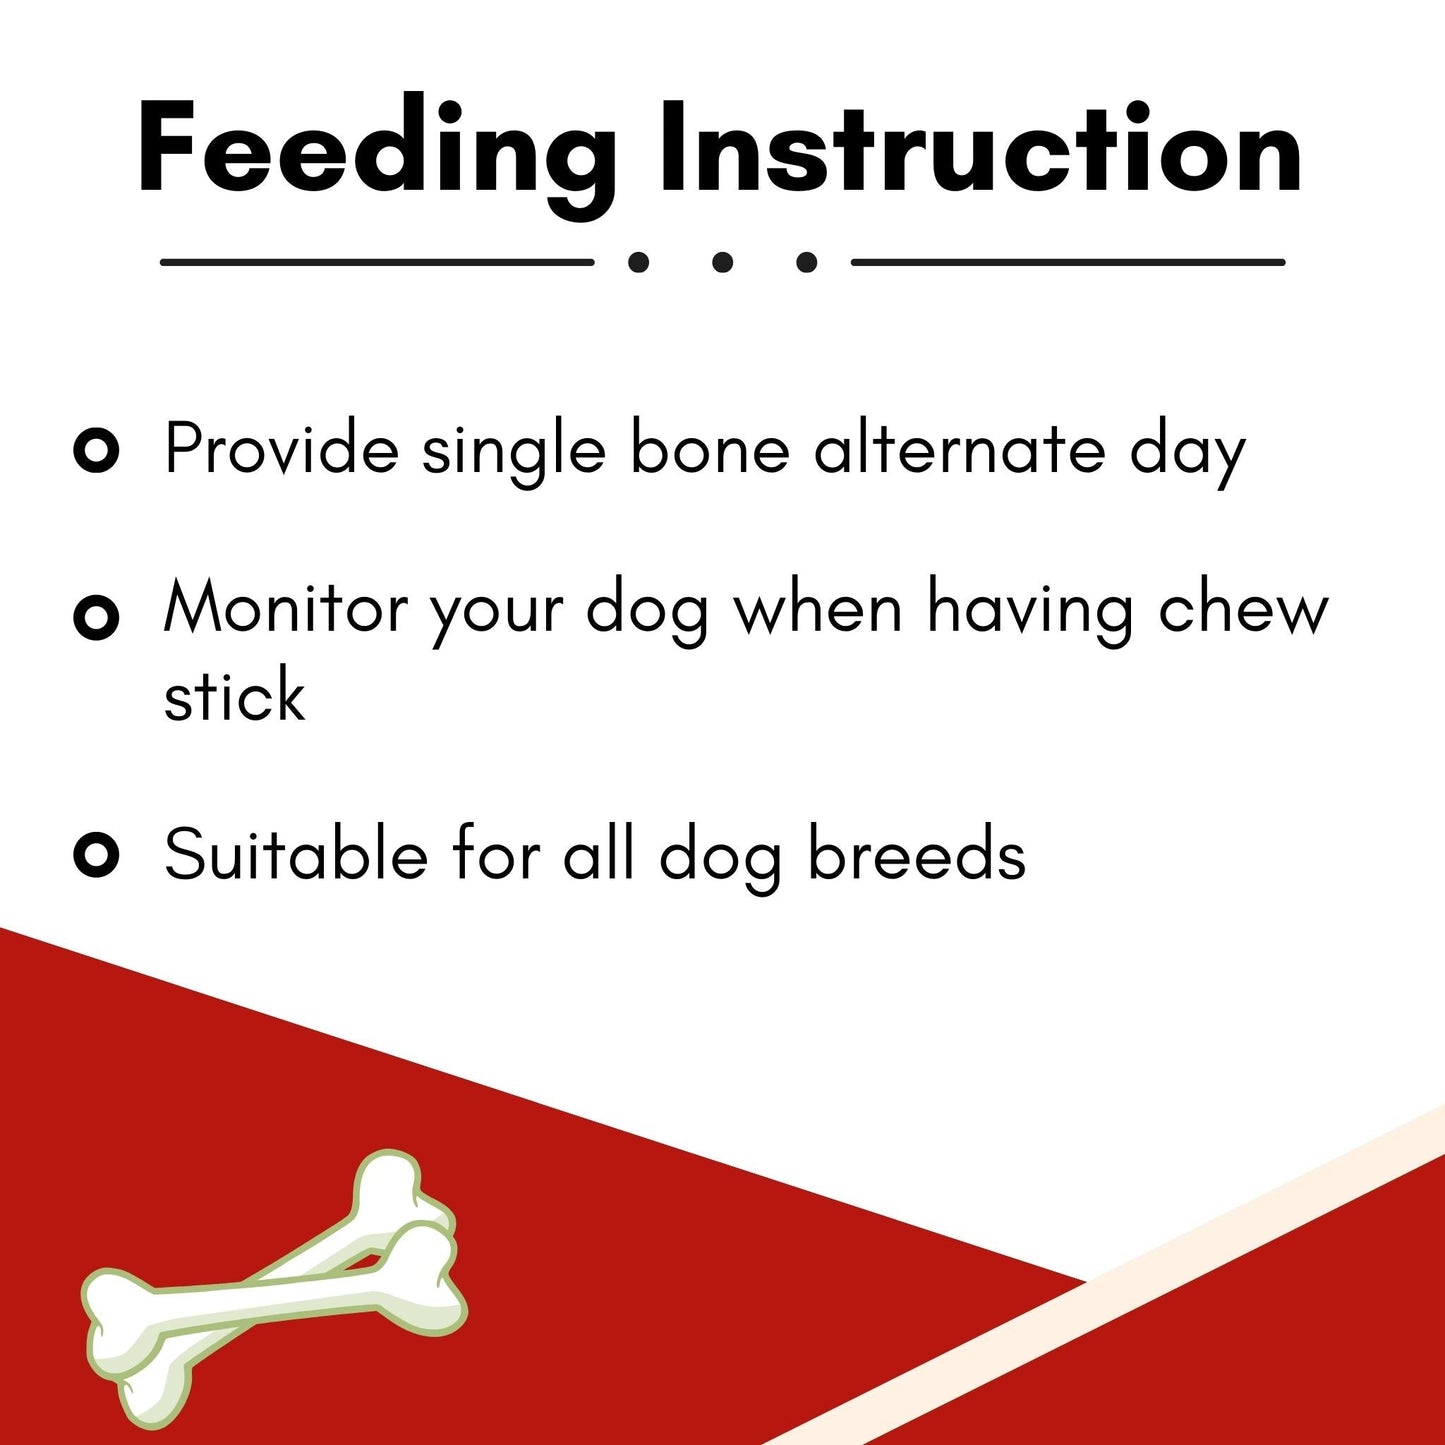 Foodie Puppies Chompsters Rawhide Bone for Dogs - 4inch Bone, 1Kg